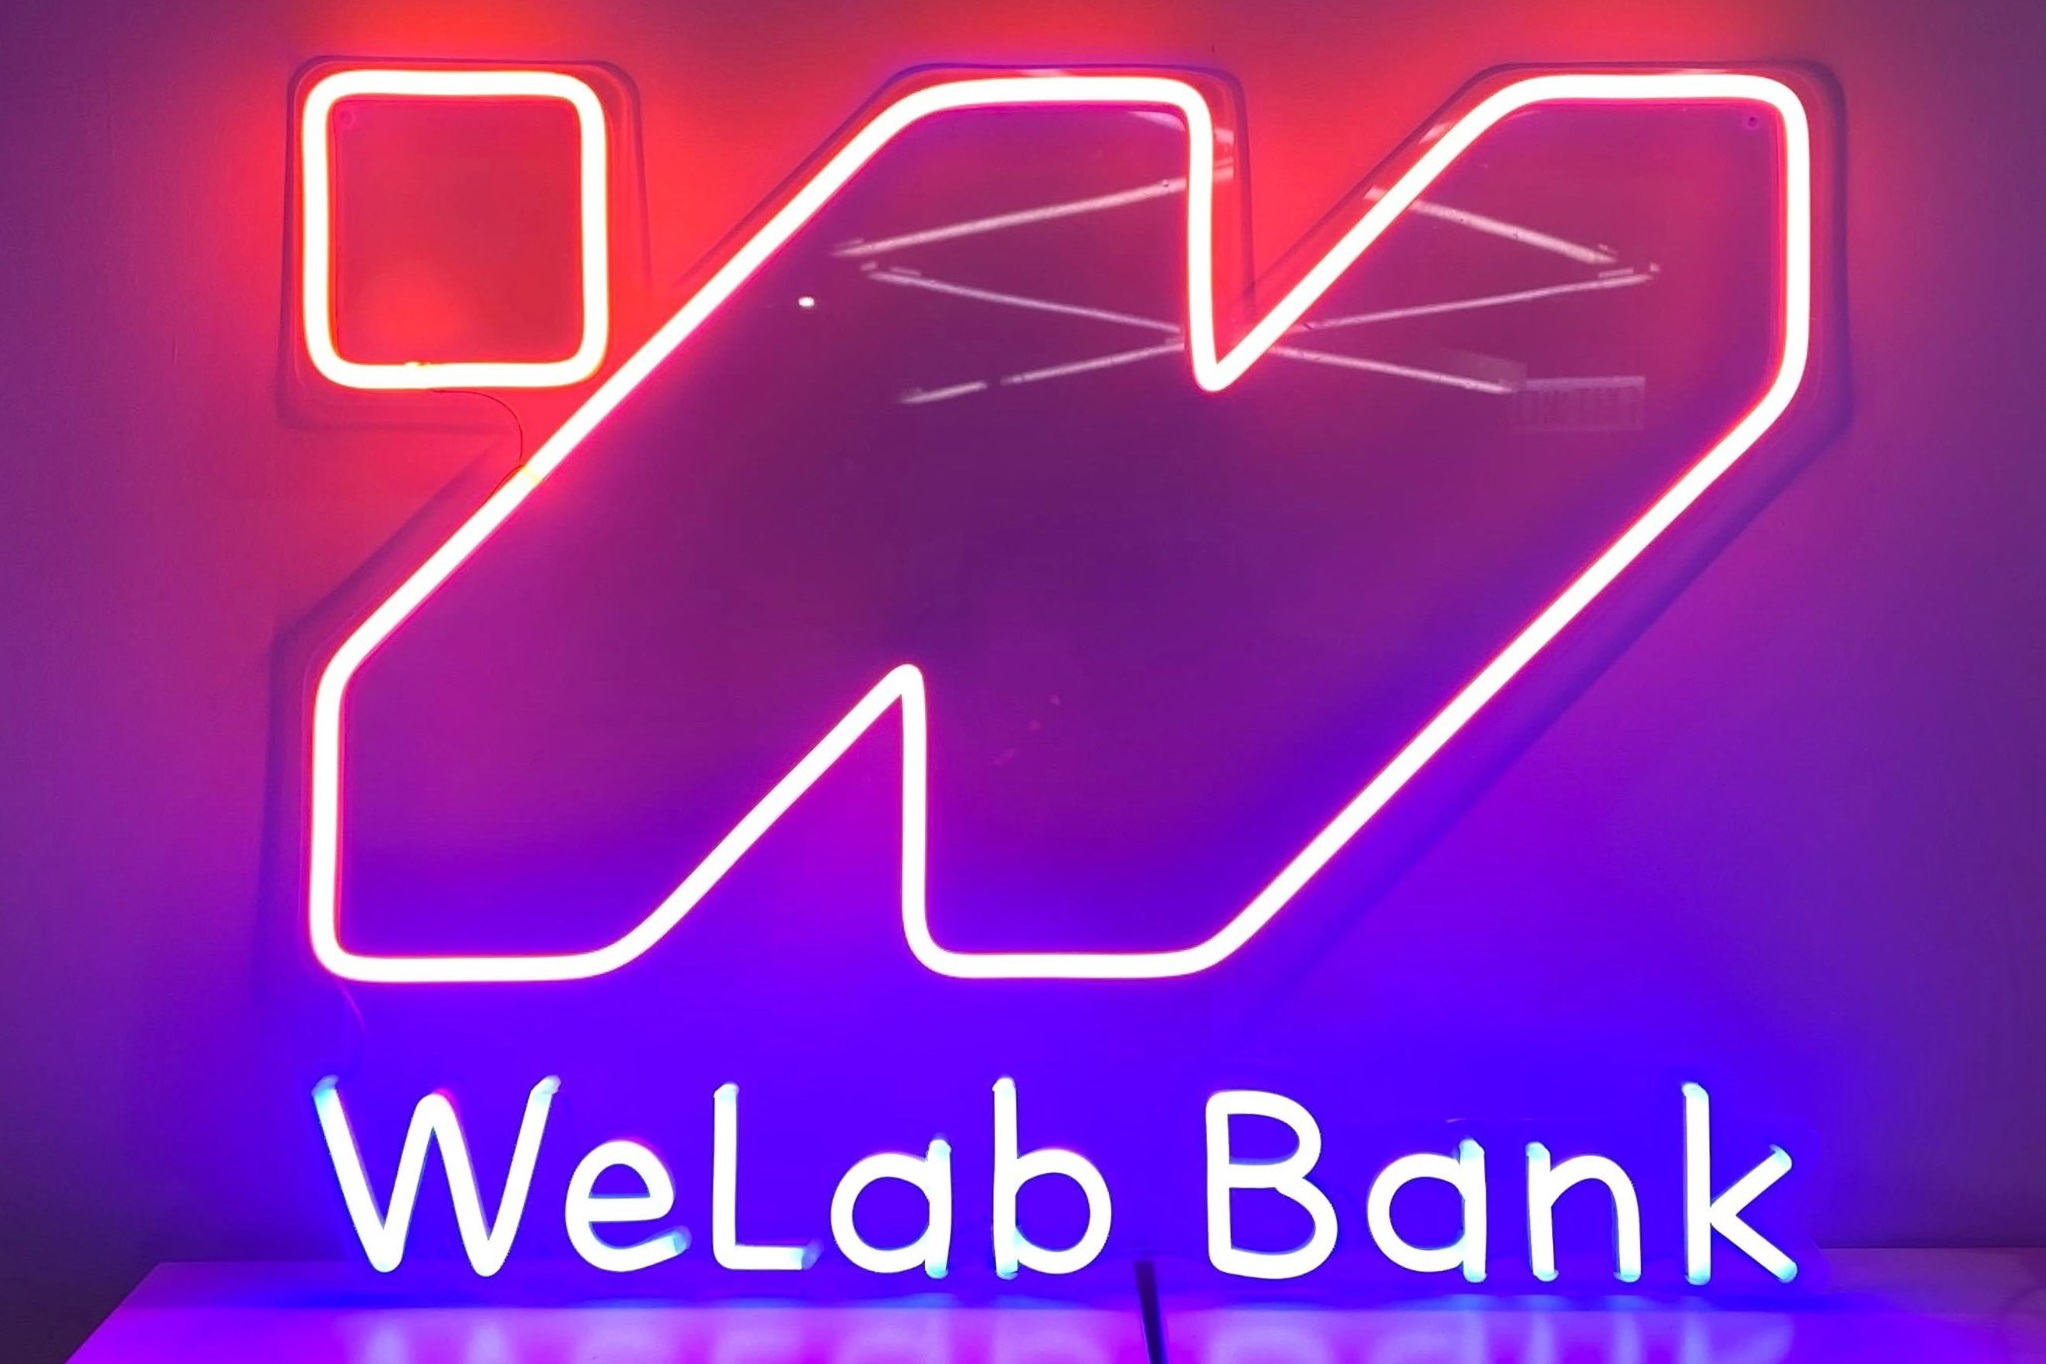 WeLab Bank在試業期間，提供最高年利率4.5厘的3個月定存息率。（WeLab Bank網上圖片）